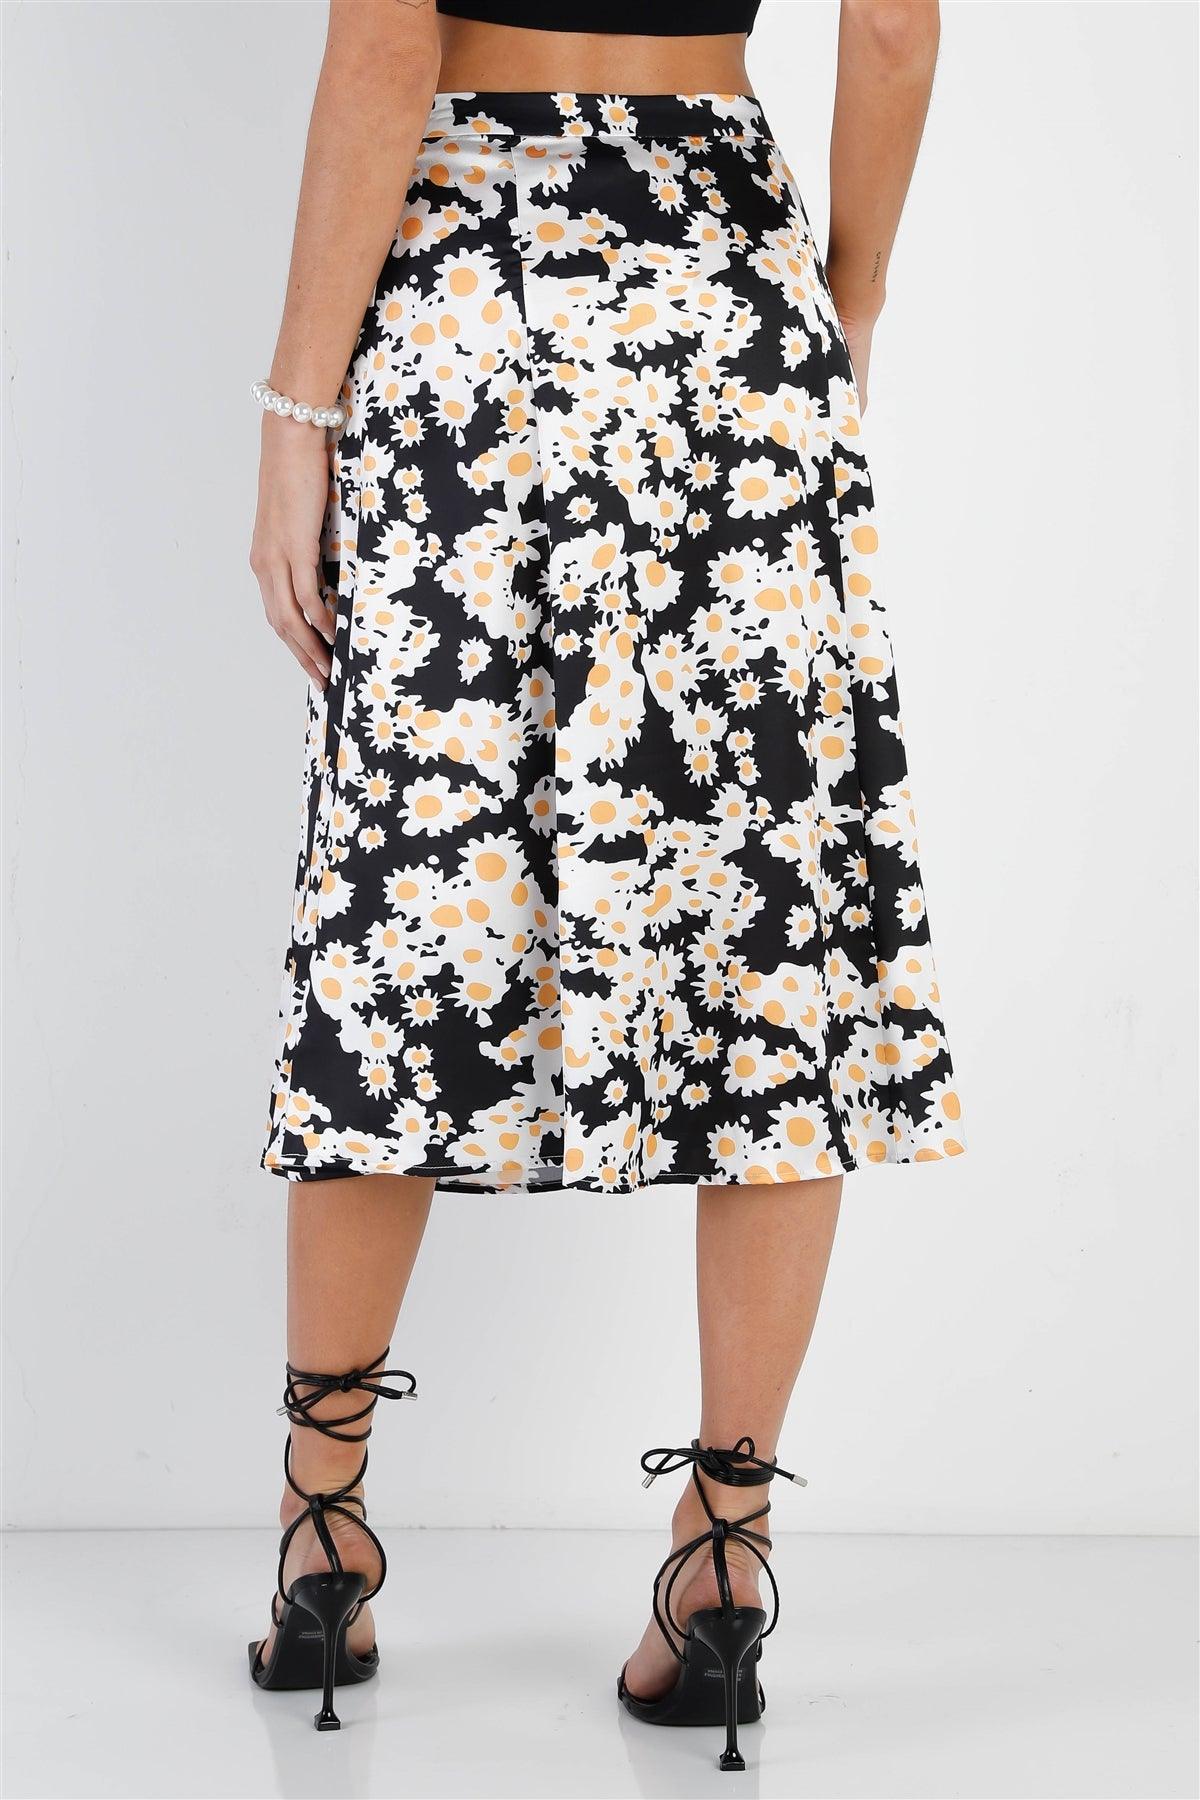 "Daisy" Print Black Multi Color Satin Effect Midi Slip Skirt /1-3-2